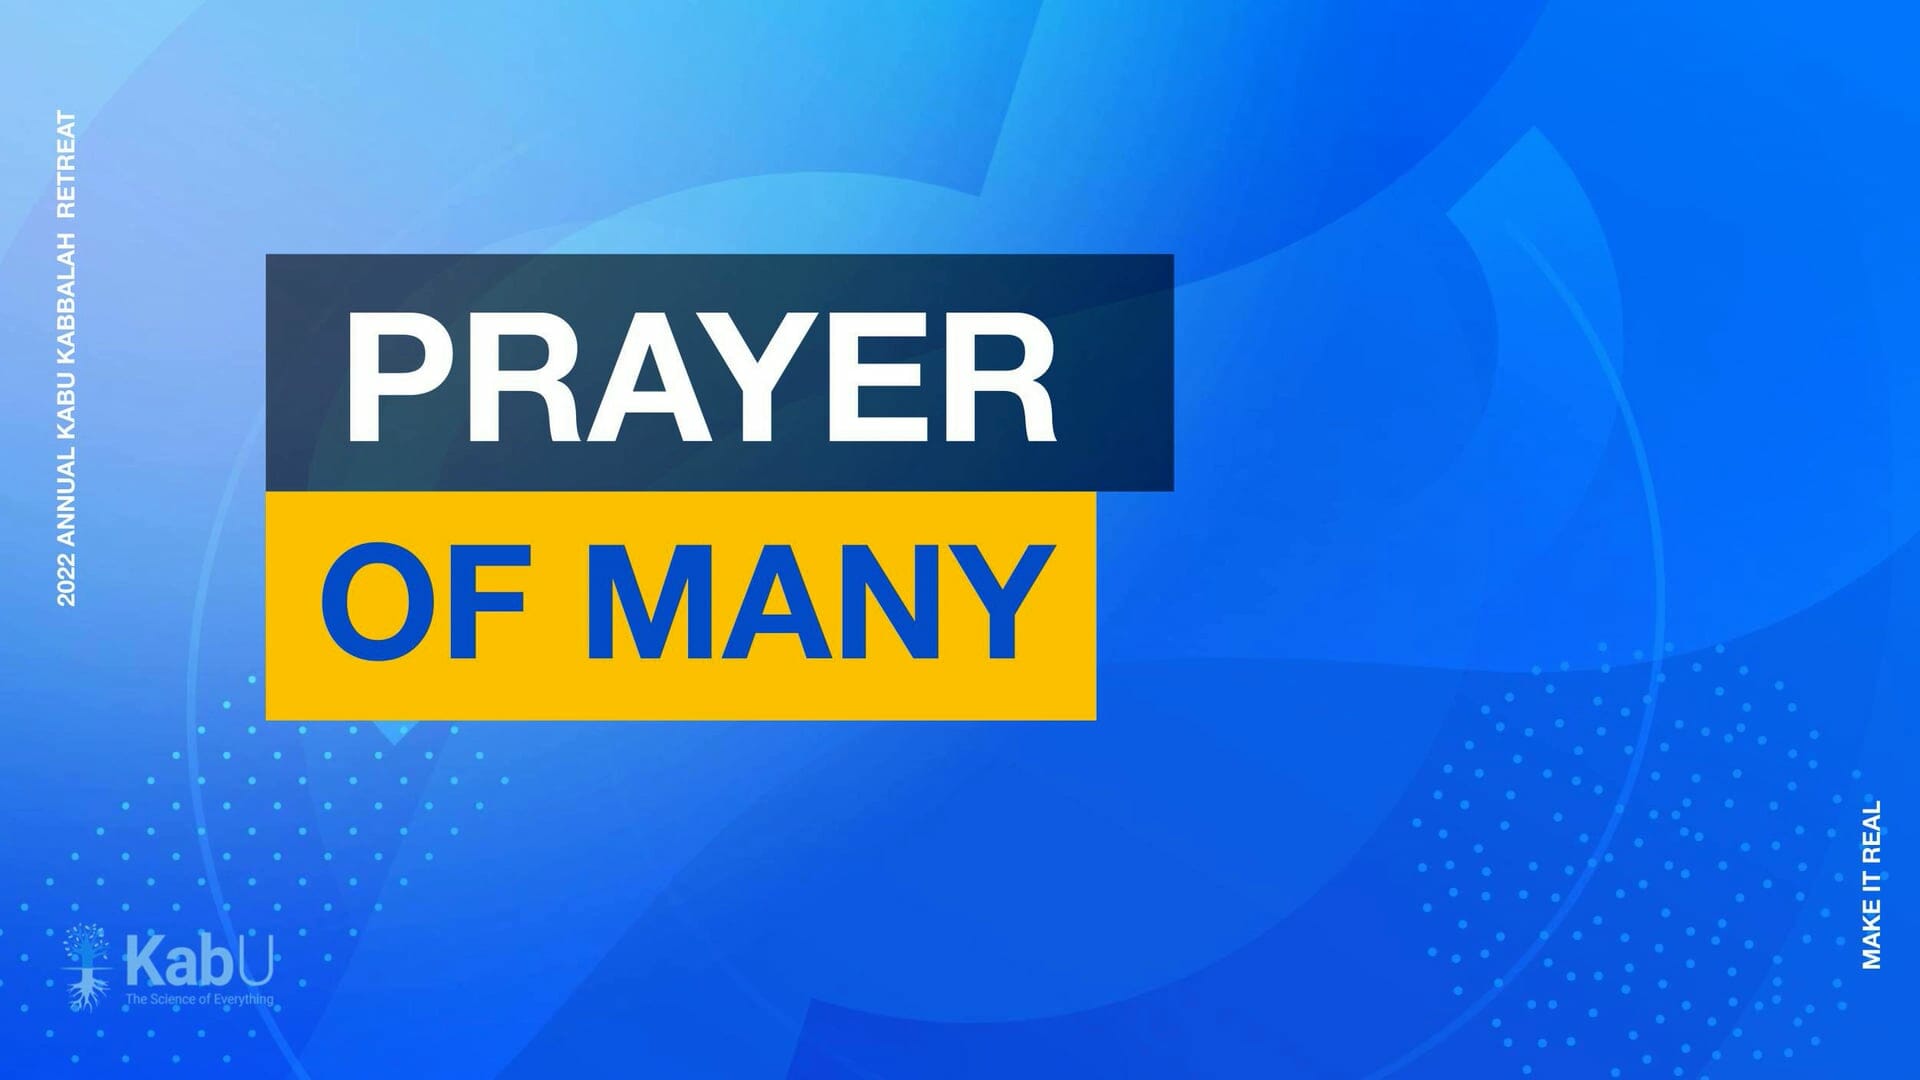 Sept 10, 2022 -Prayer of Many